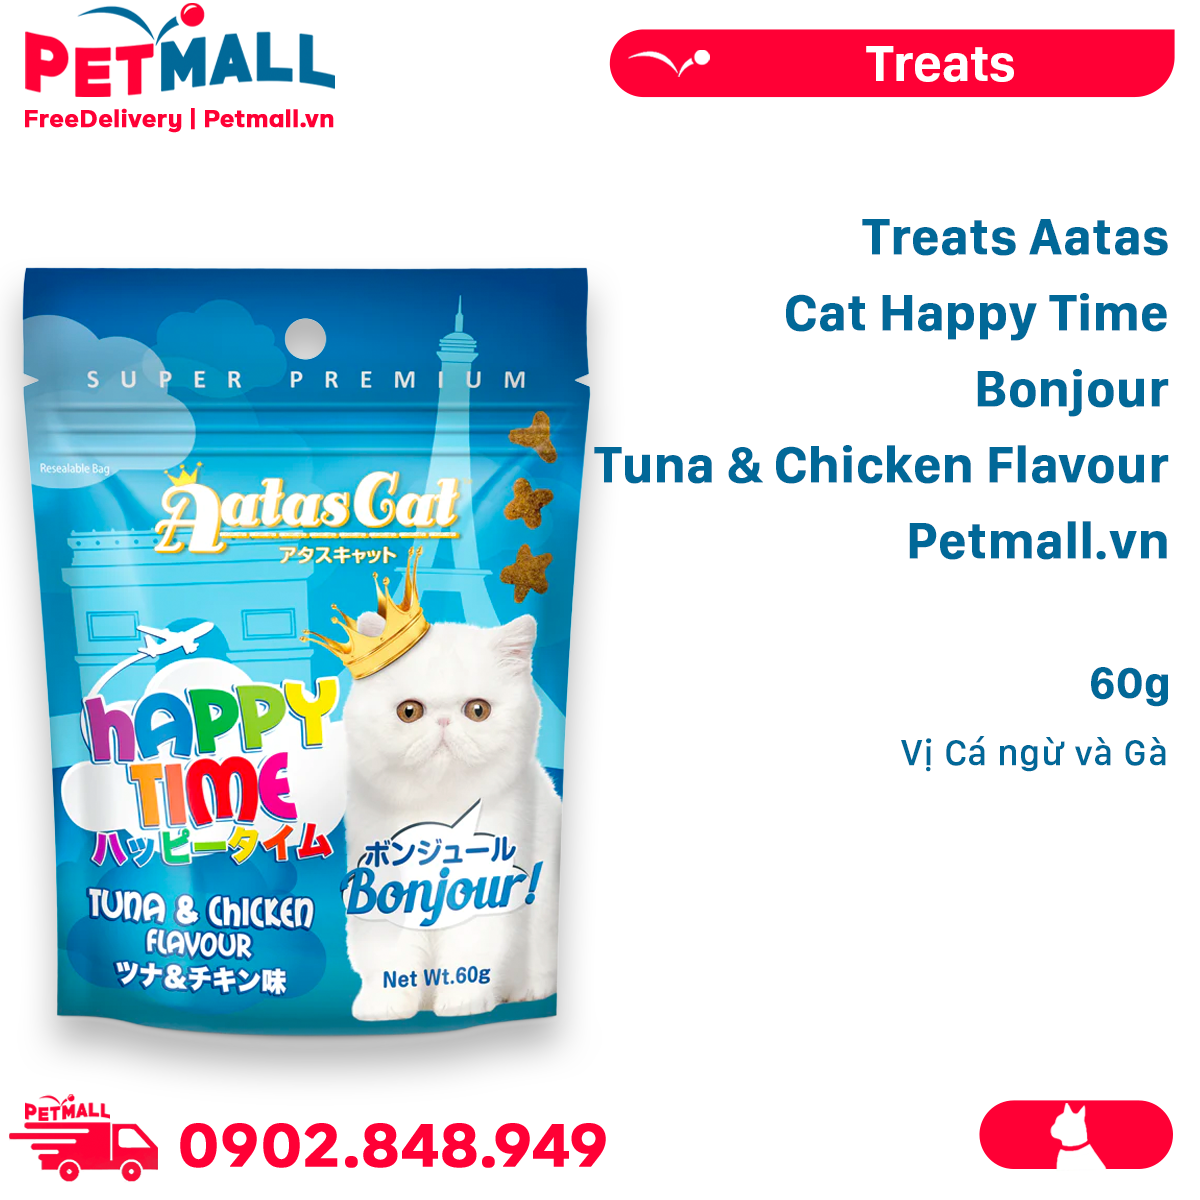 Treats Aatas Cat Happy Time Bonjour Tuna & Chicken Flavour 60g